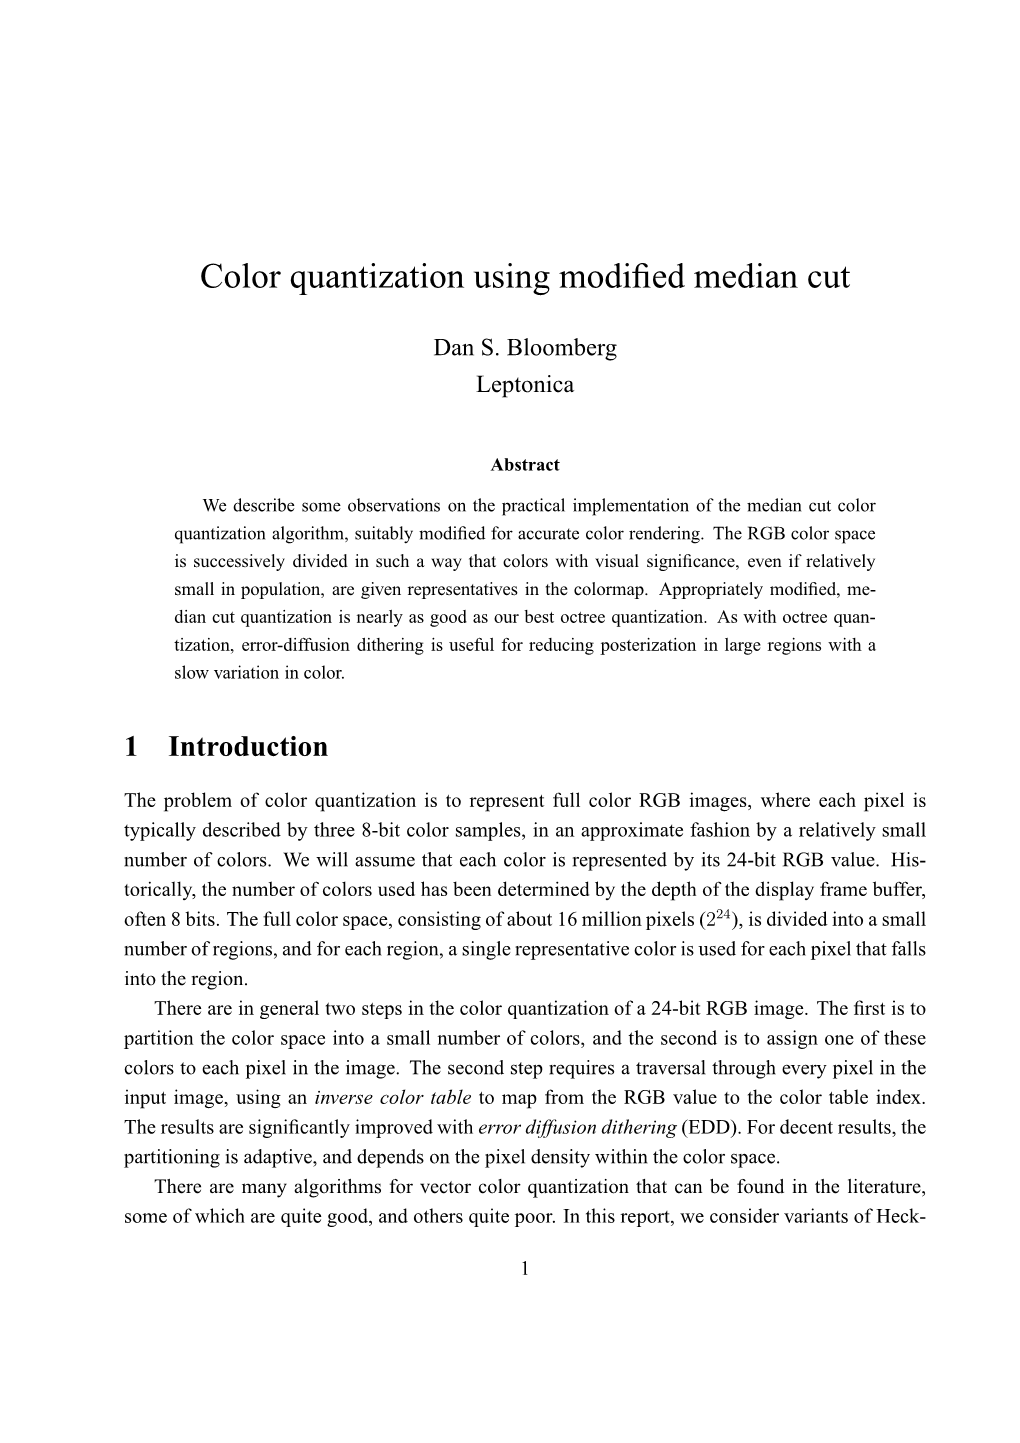 Color Quantization Using Modified Median